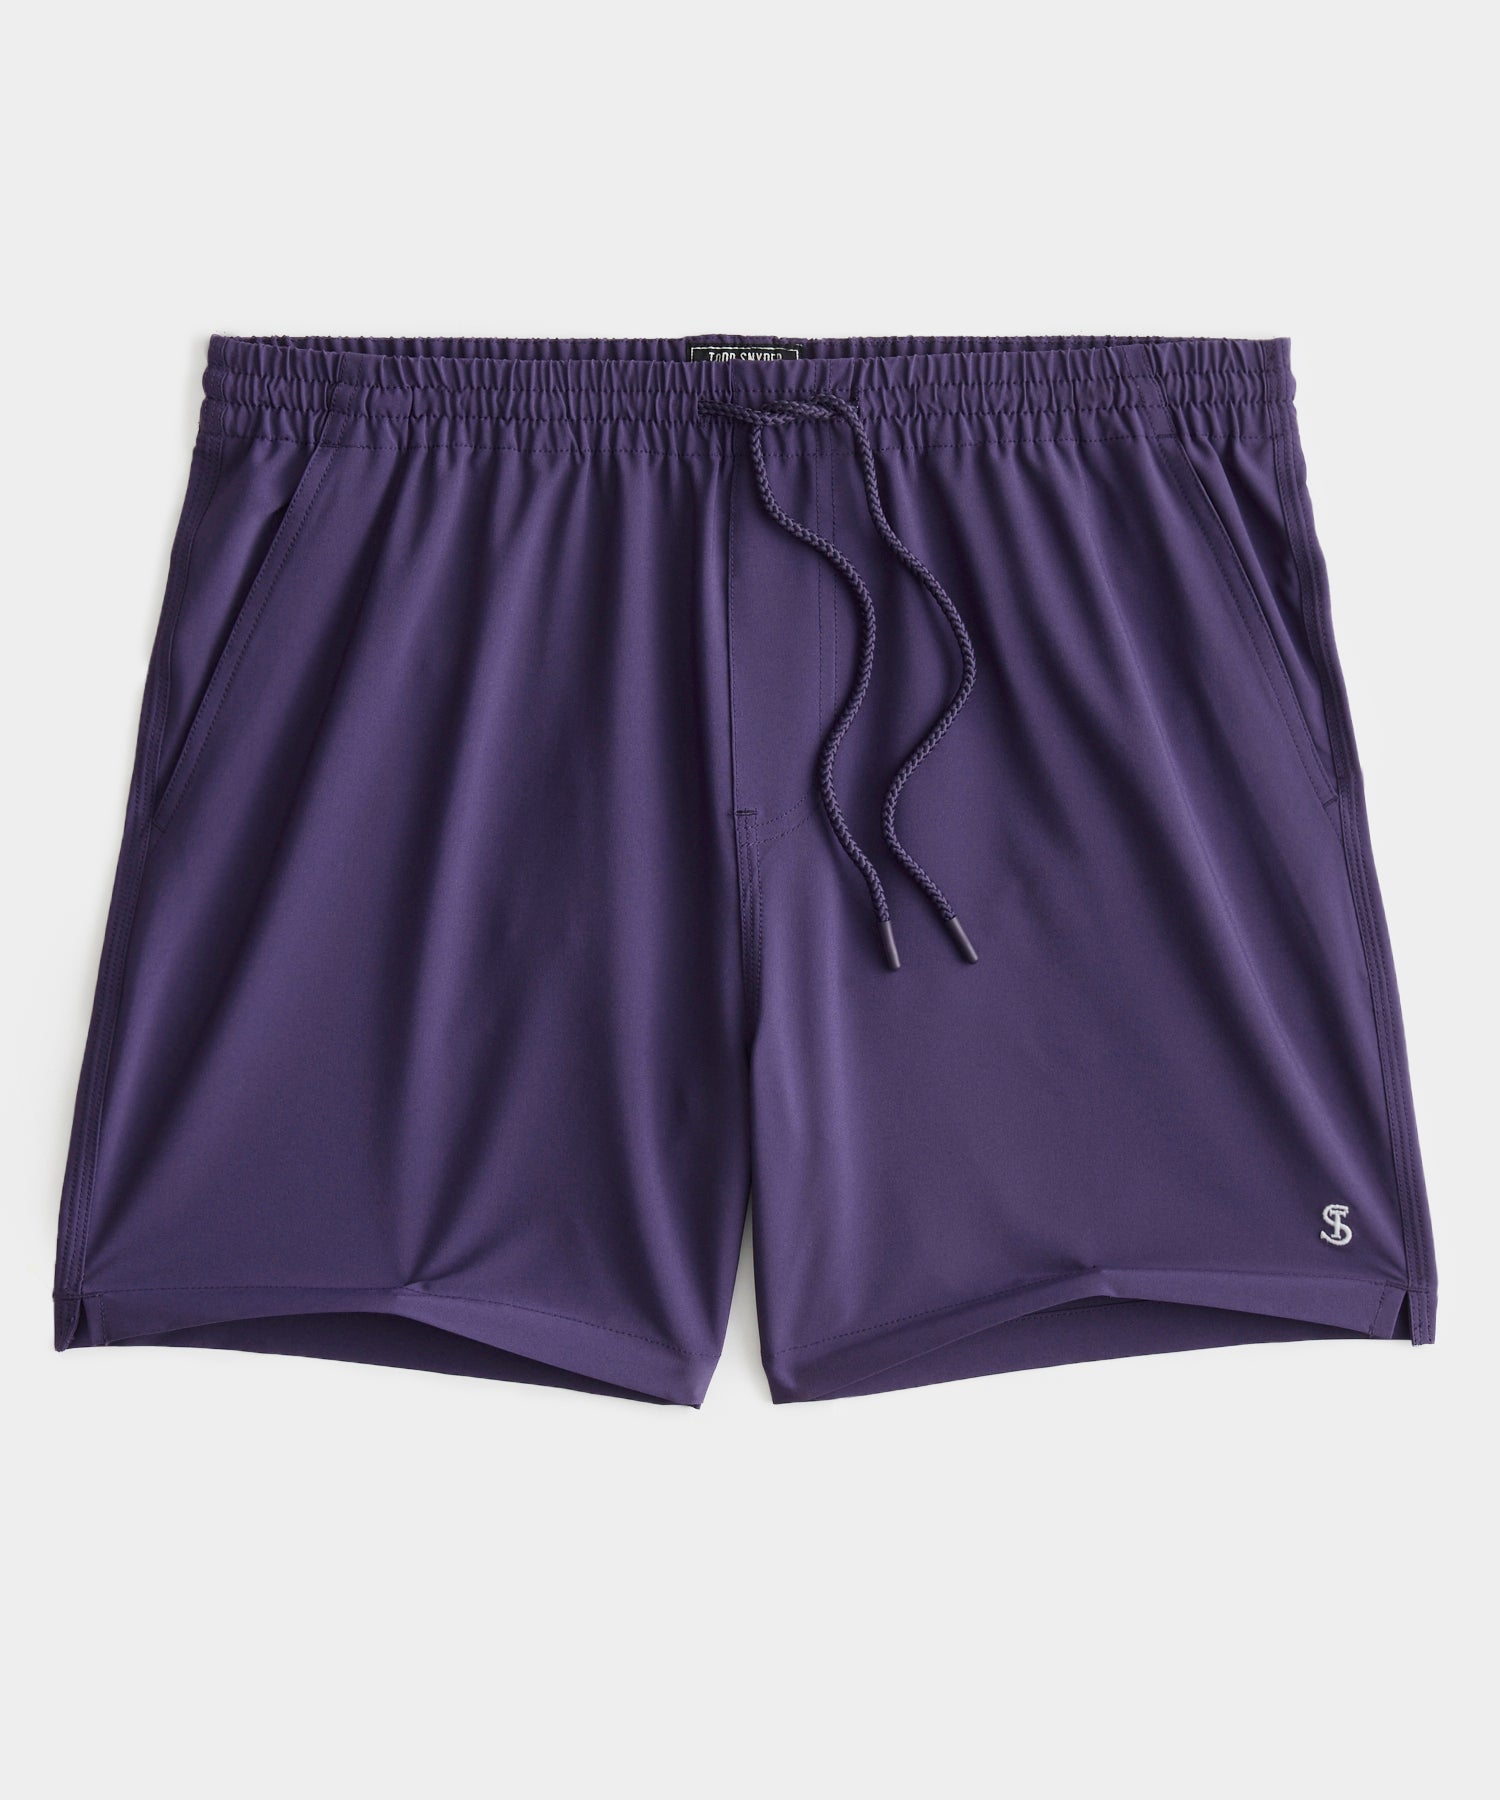 5" Montauk Swim Short in Purple Haze